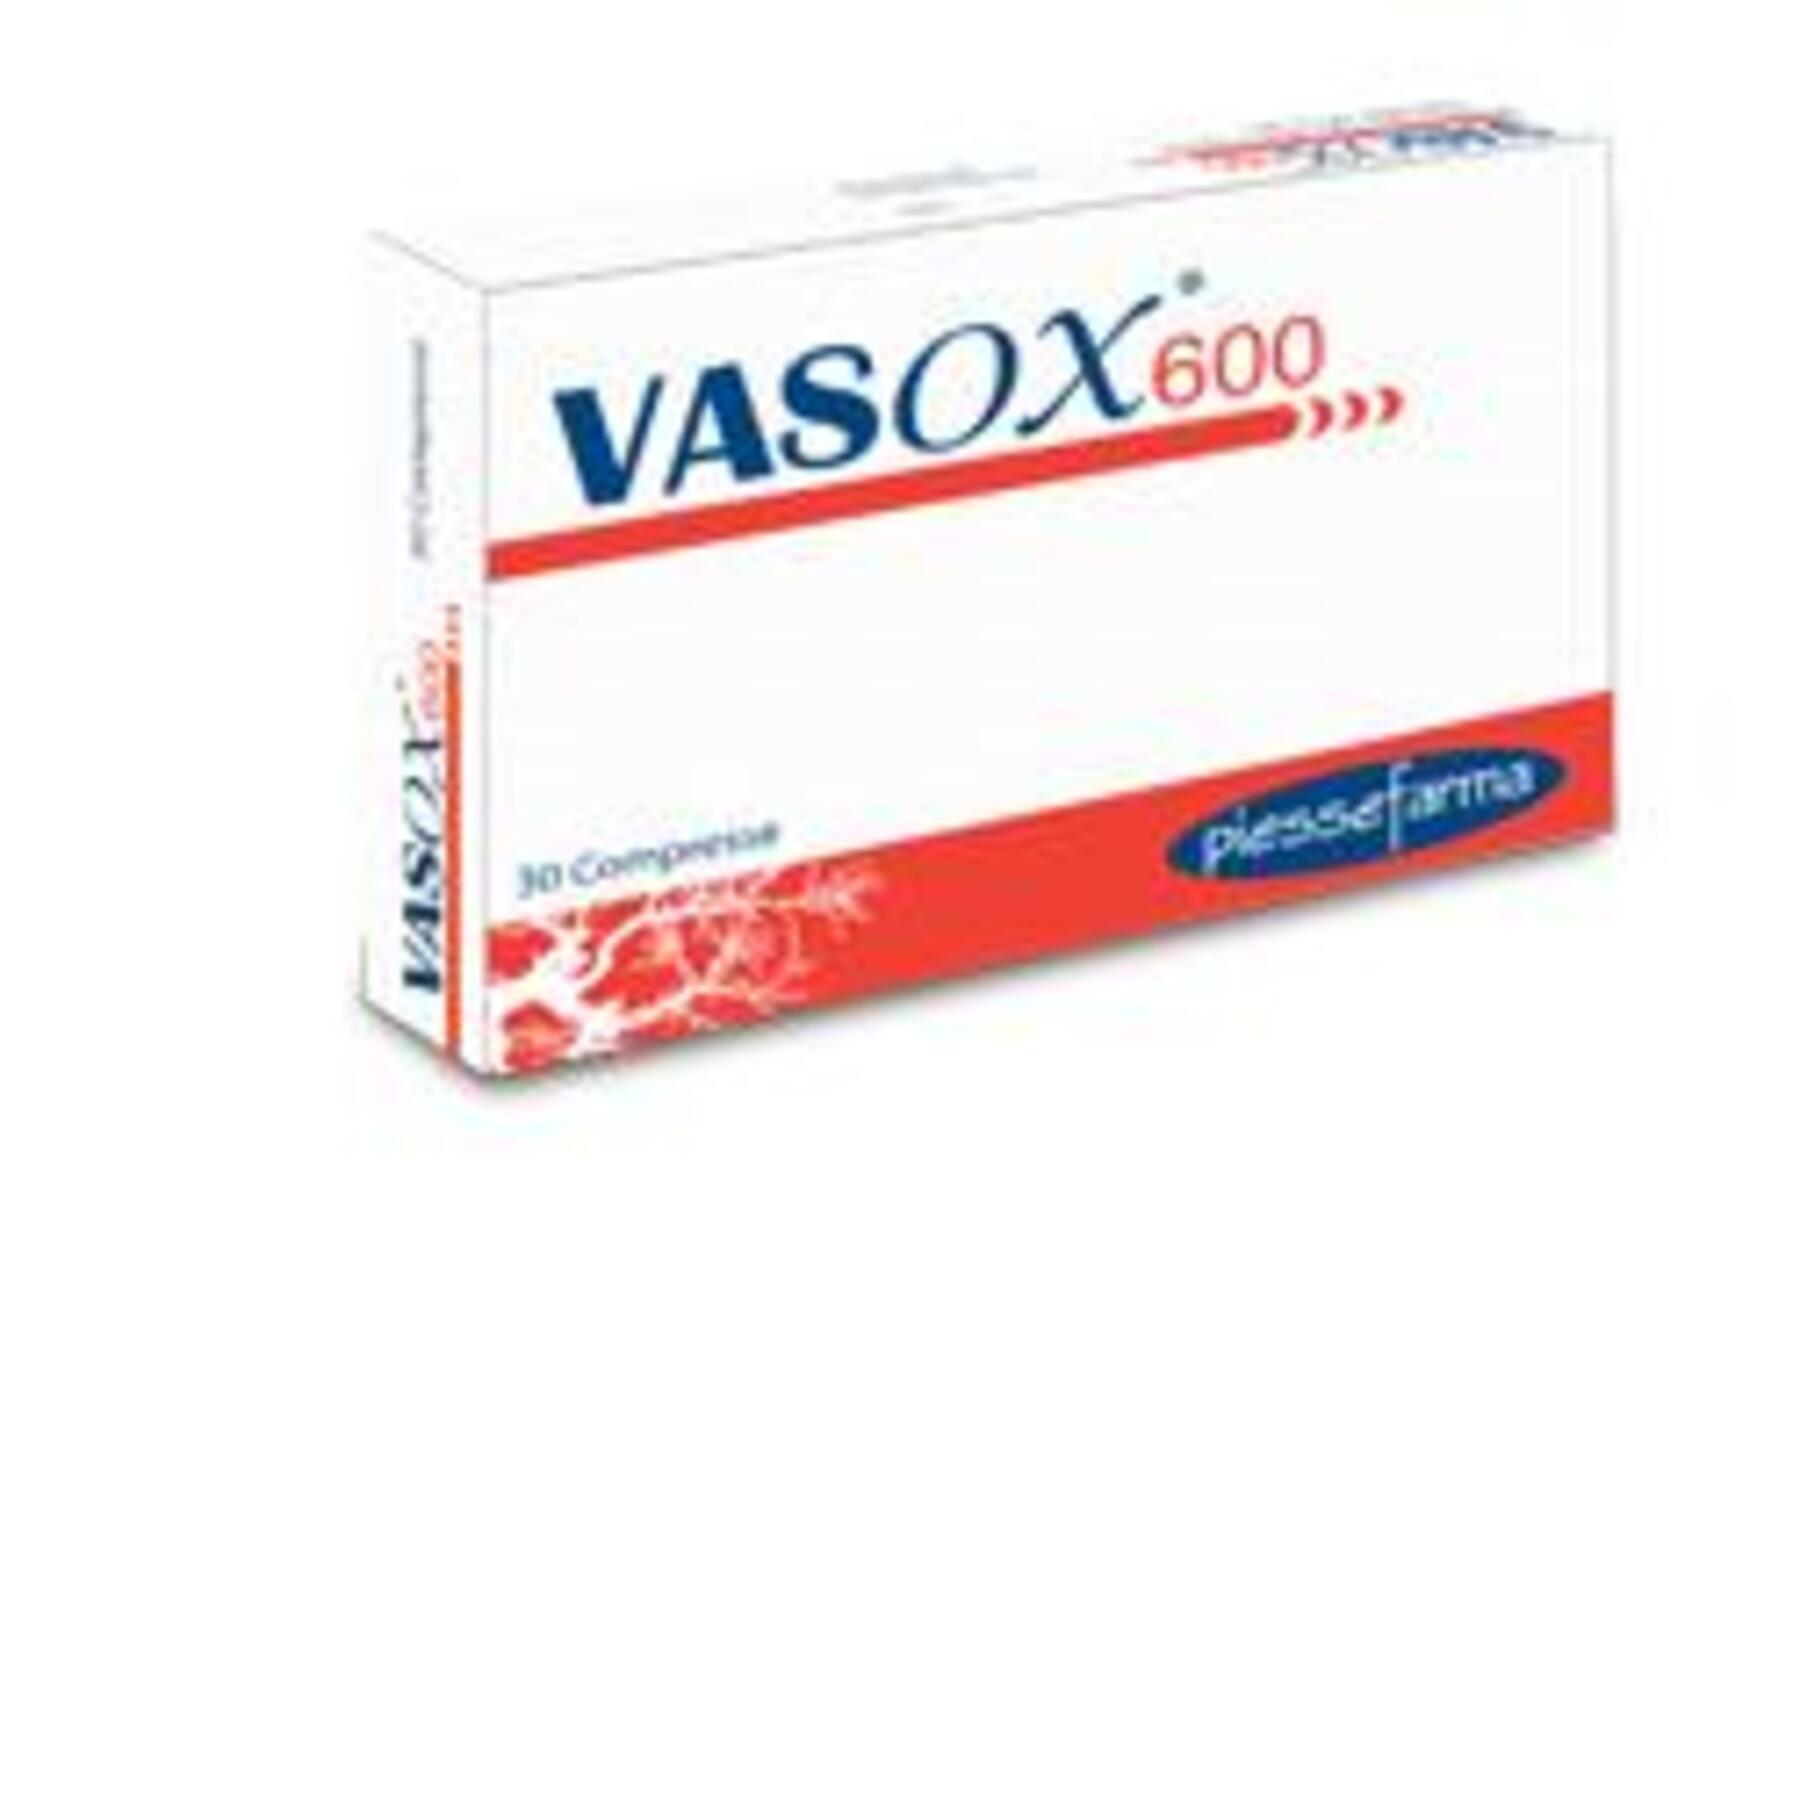 piessefarma vasox 600 30 compresse